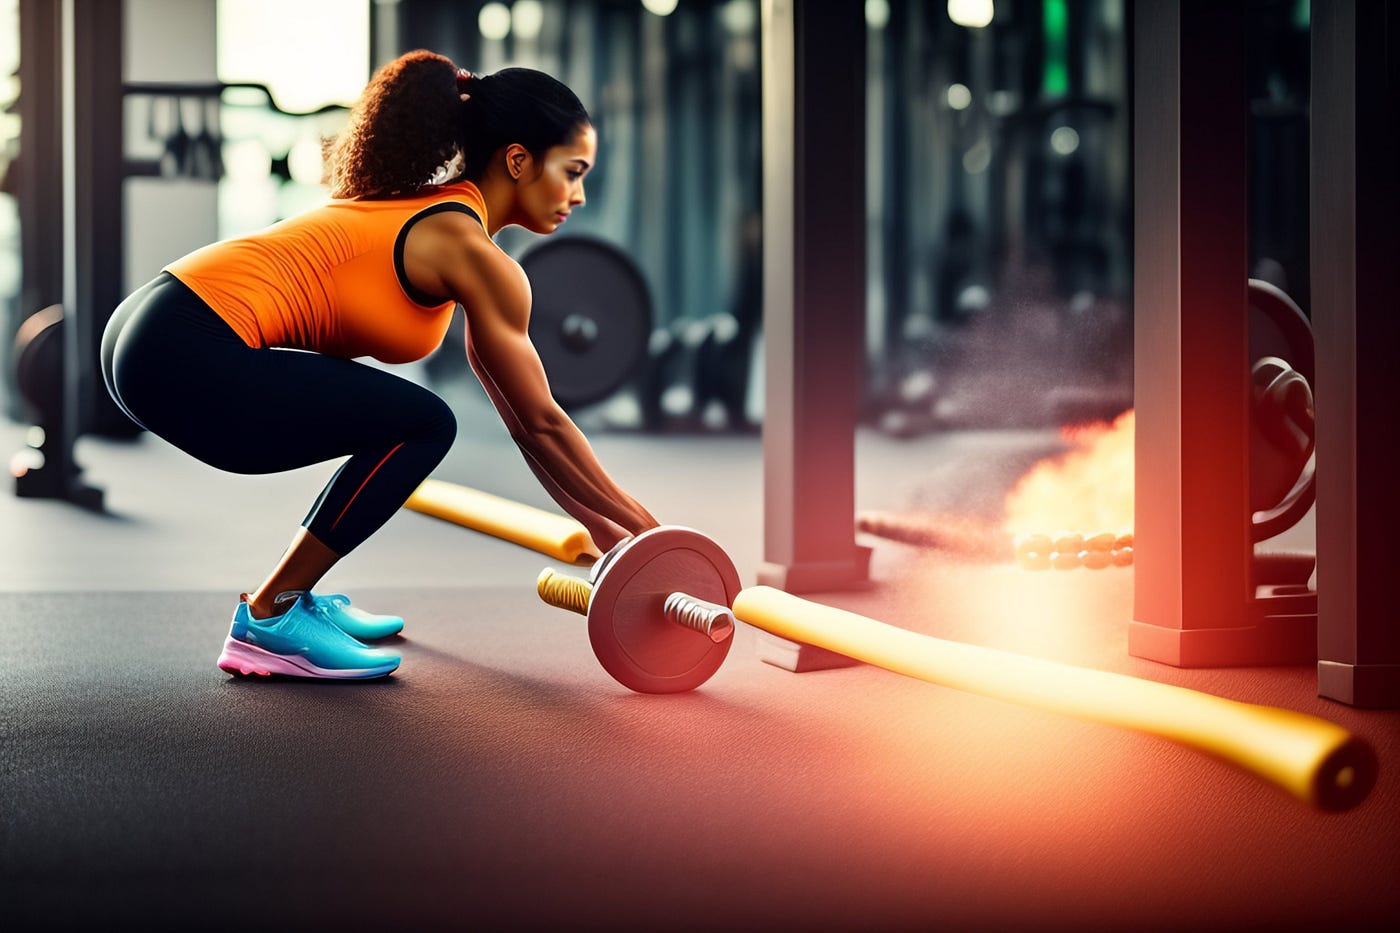 Strength training: weight training for women (beginners welcome)